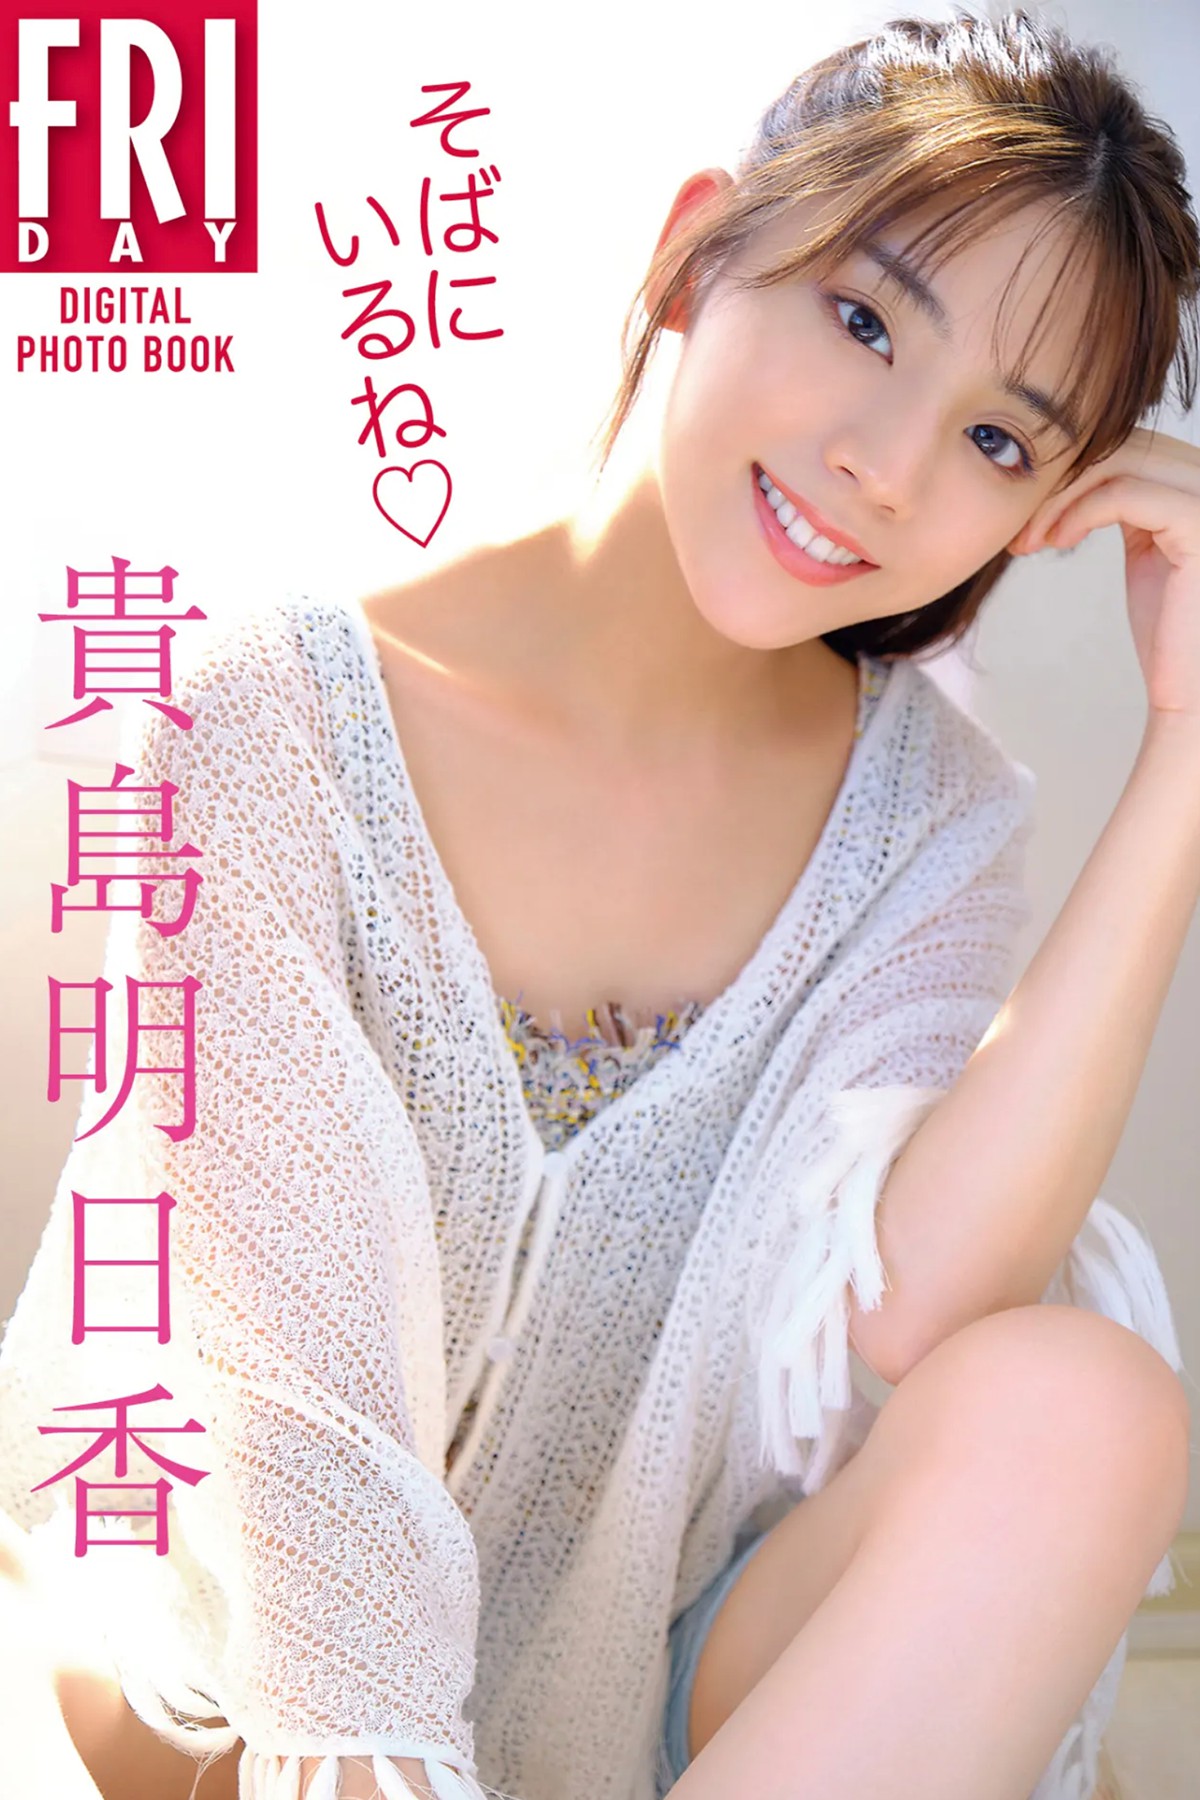 FRIDAY Digital Photo Asuka Kijima 貴島明日香 – I Am By Your Side Complete Edition